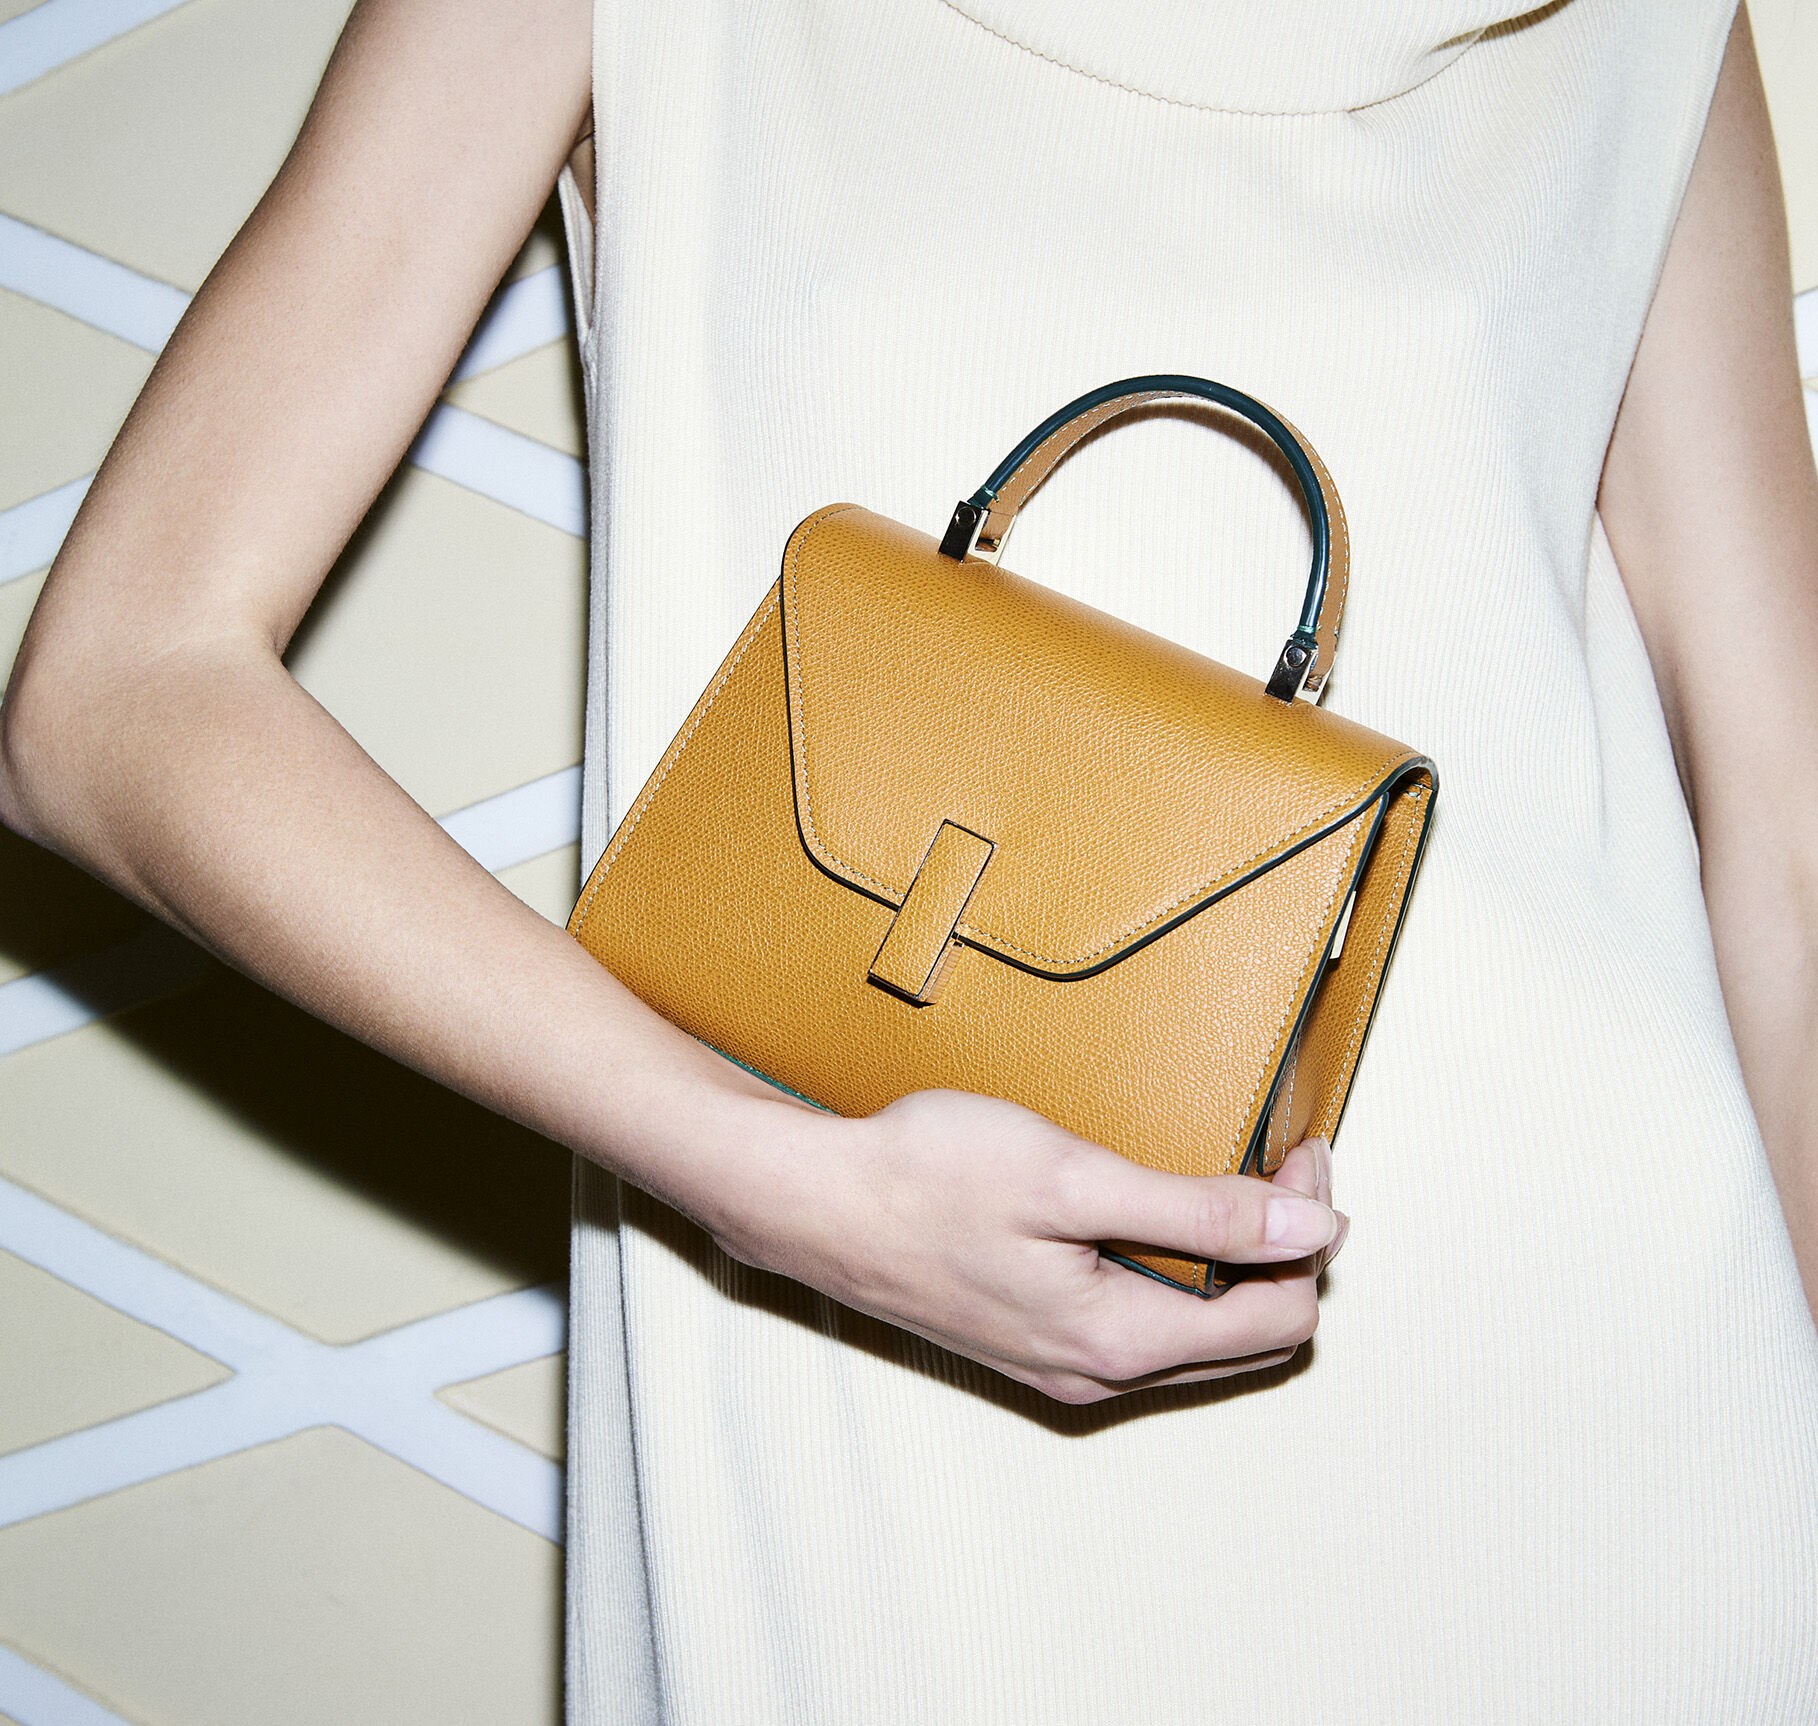 Luxury Italian leather handbags, designer purses - Valextra